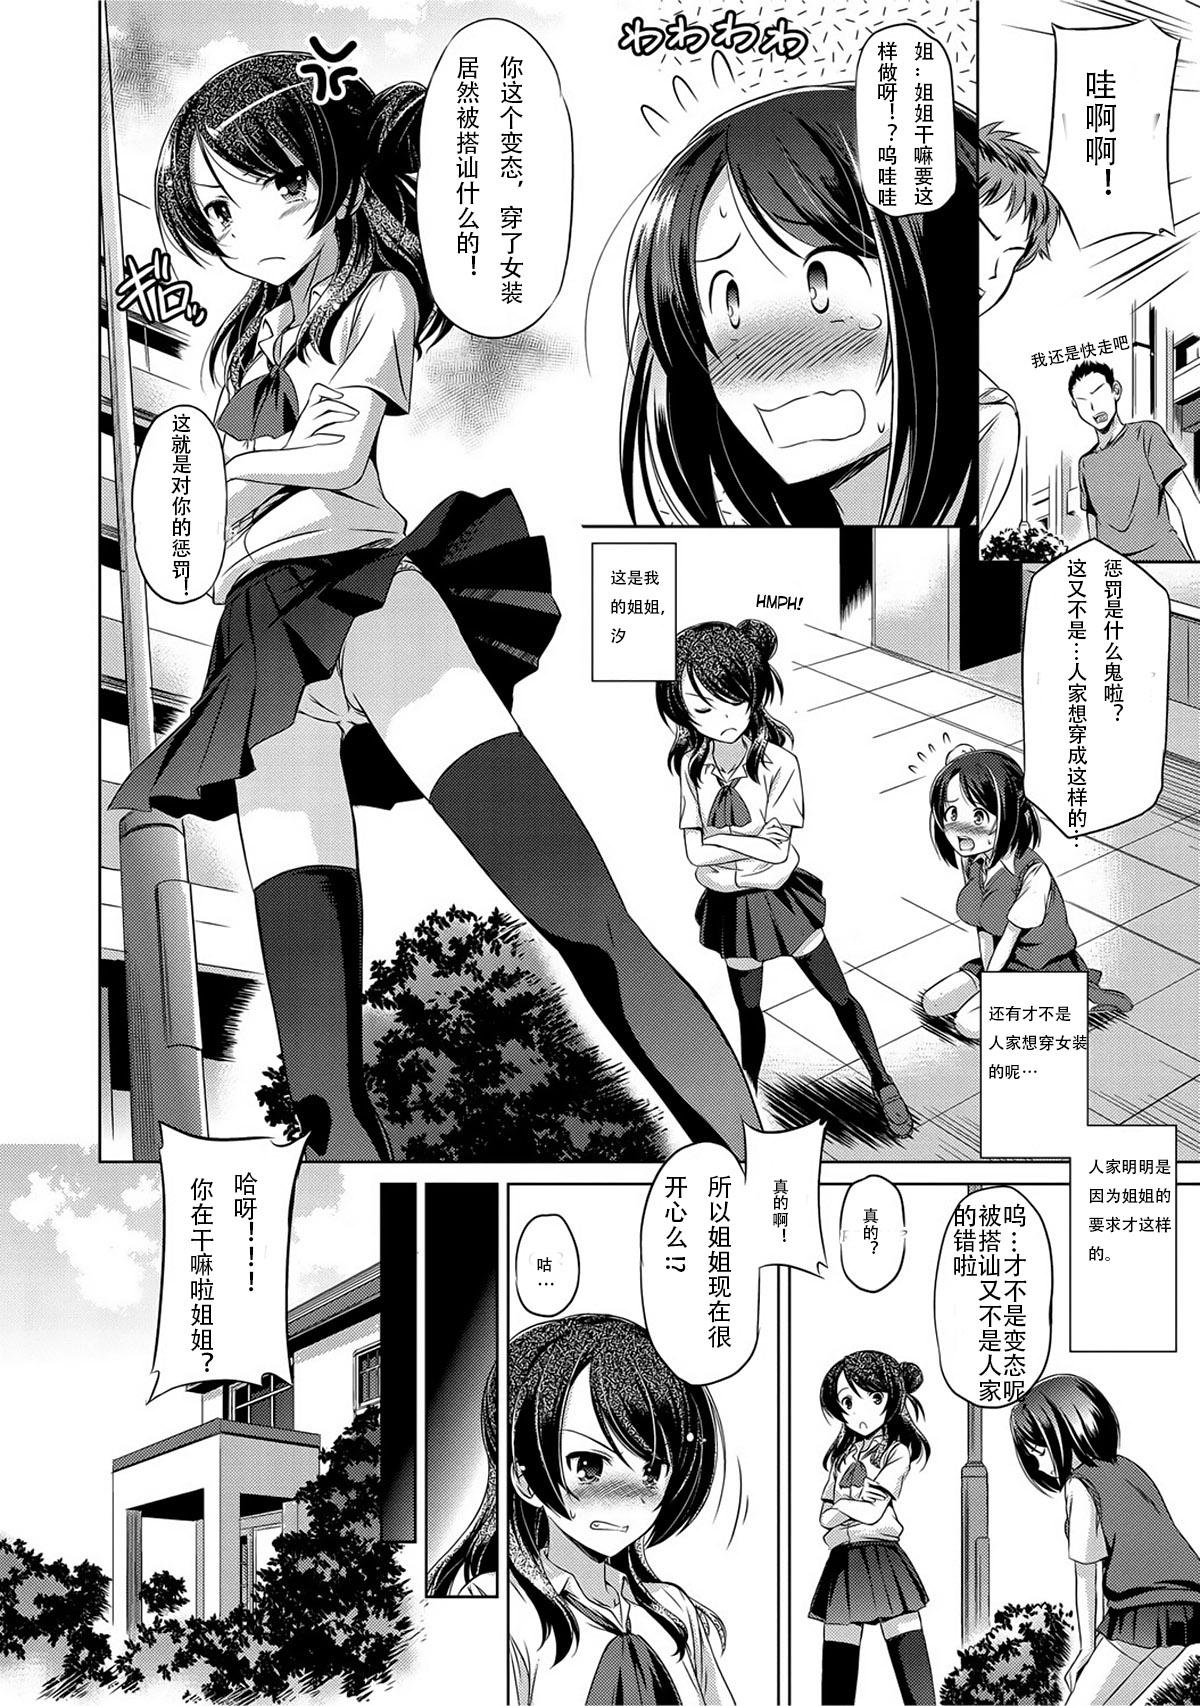 Penetration Minna no Hoshii Mono | The Thing that Everyone Wants Free Porn Hardcore - Page 2